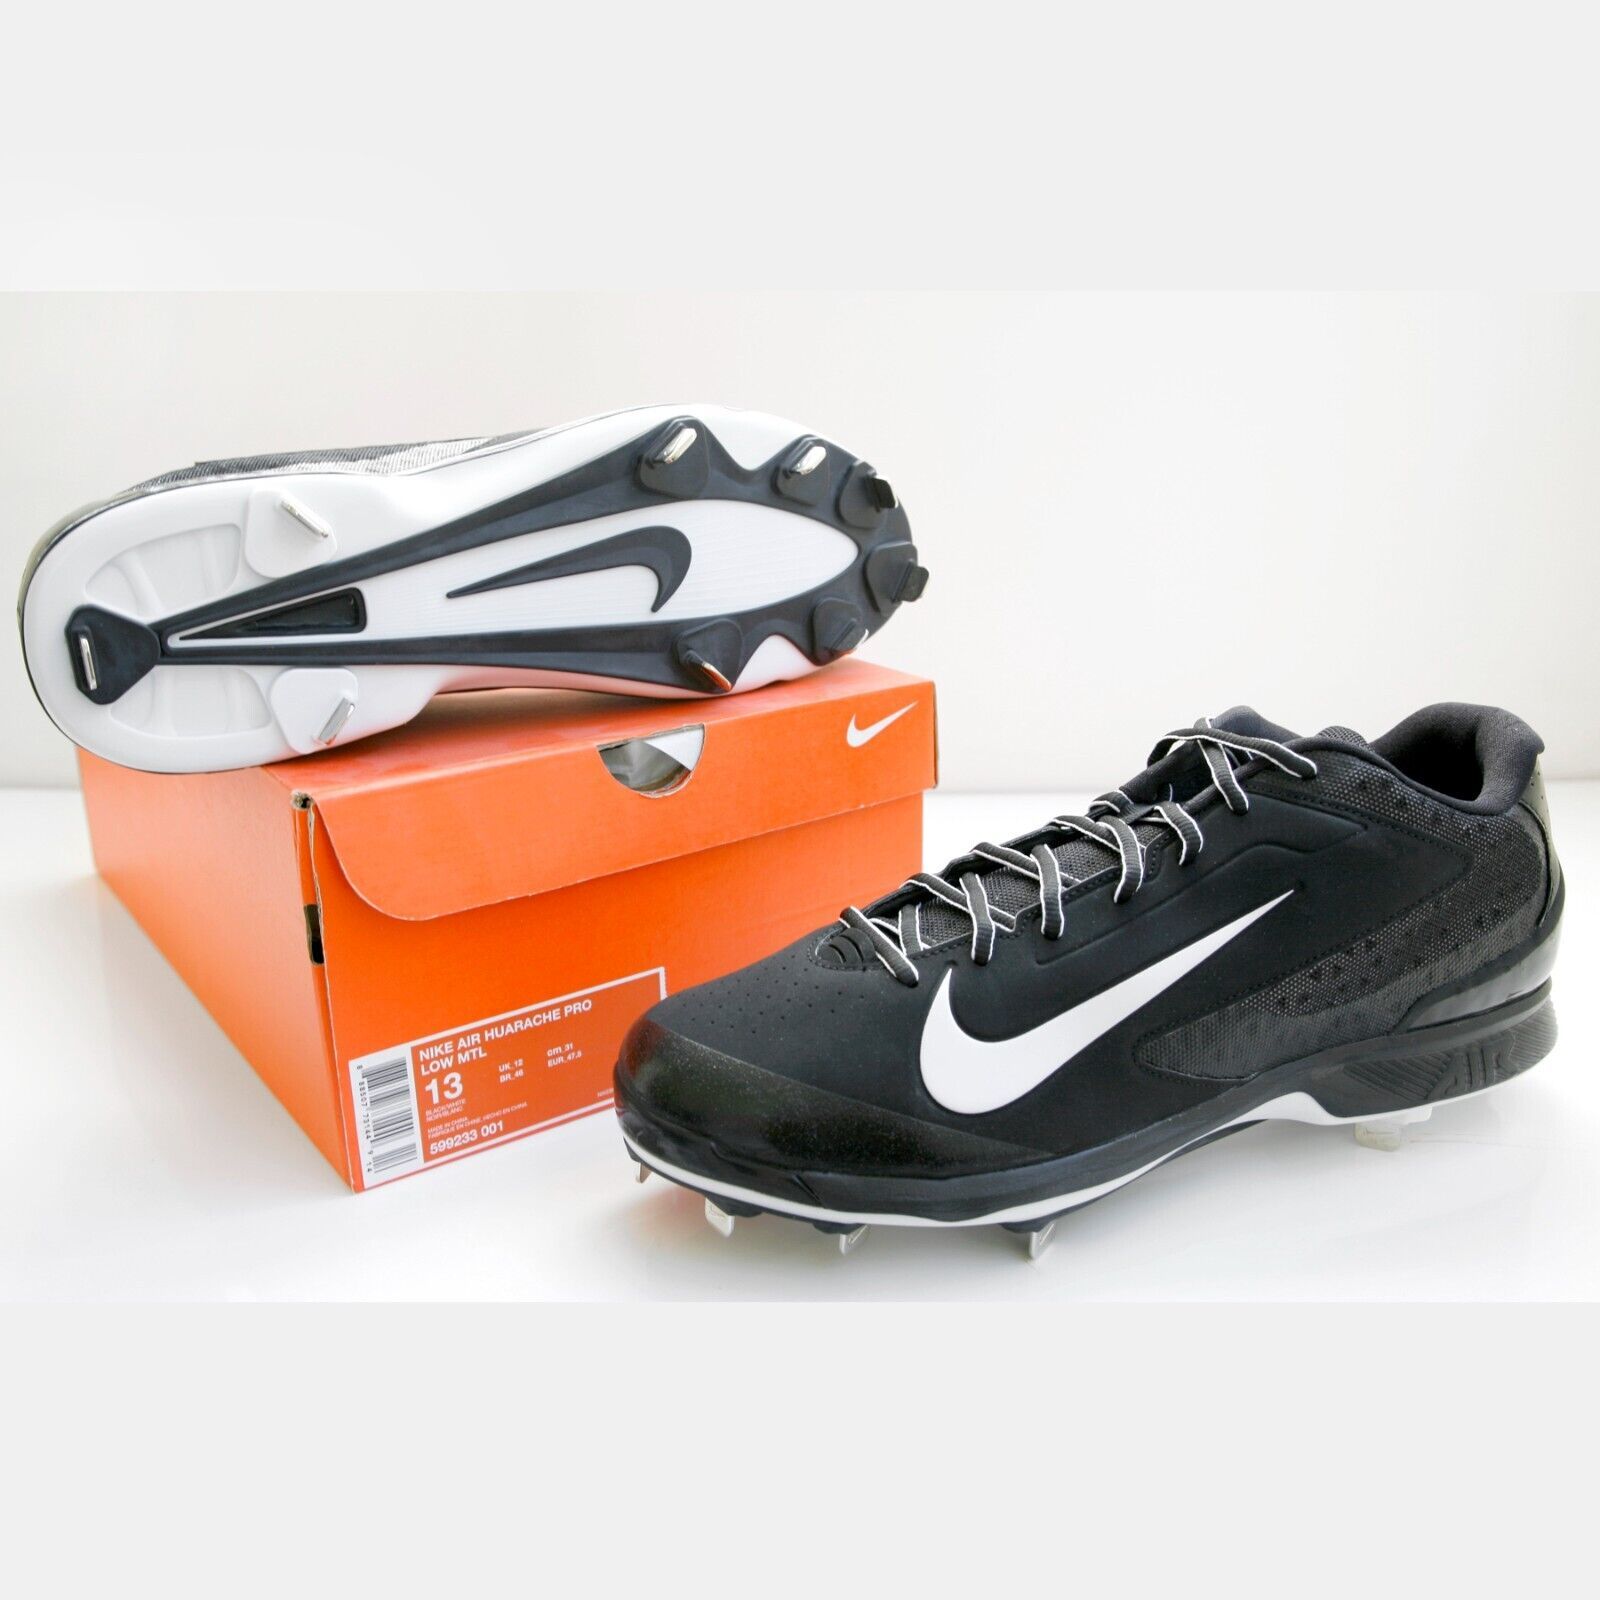 Nike Men's Air Huarache Pro Low MTL Baseball Cleats Black 599233-001 Size 13 - $94.01